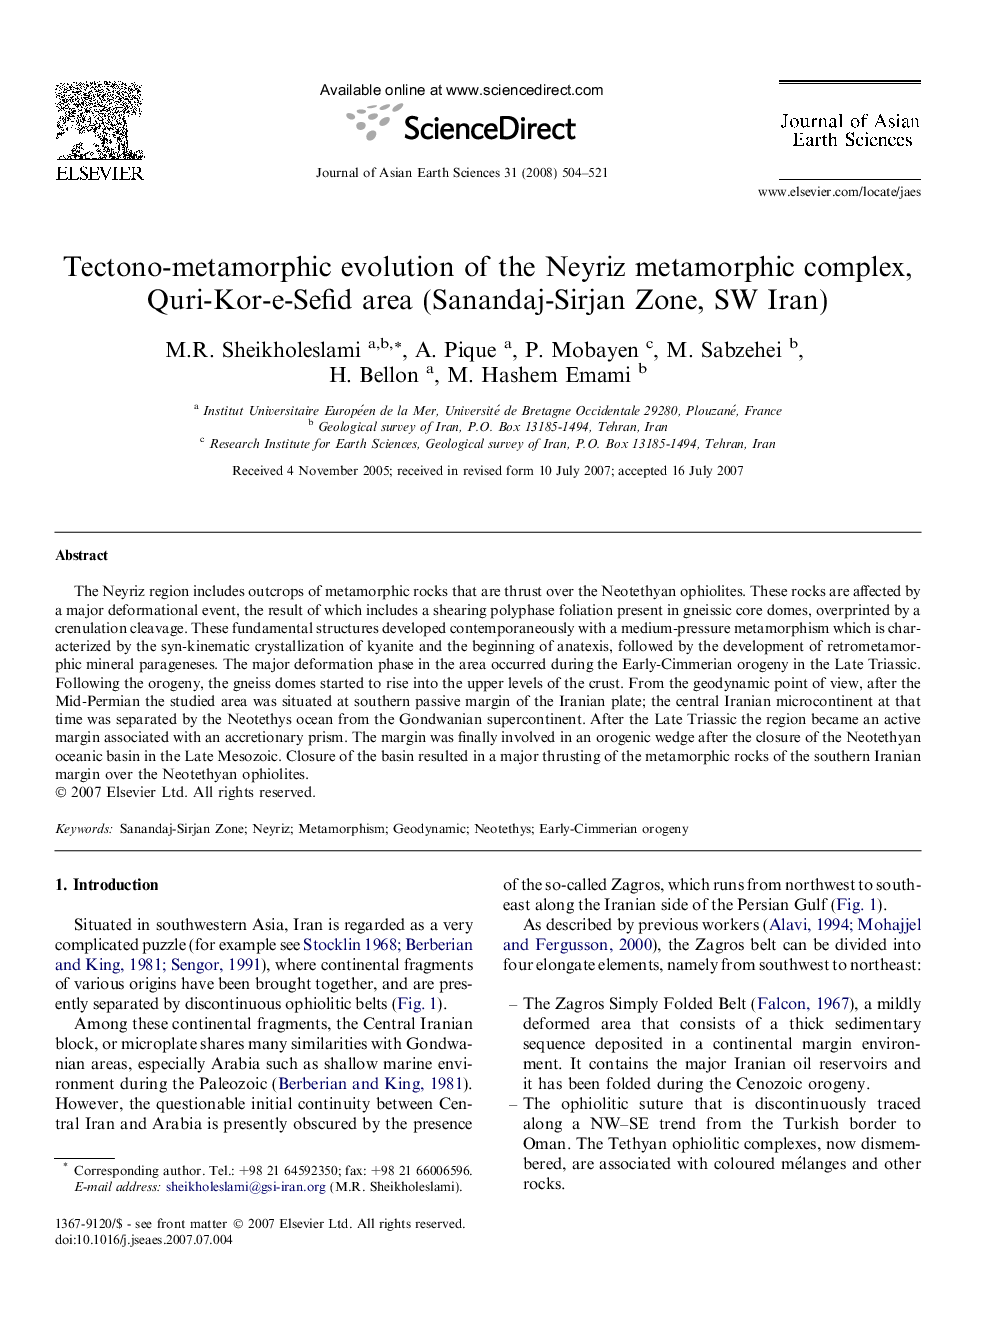 Tectono-metamorphic evolution of the Neyriz metamorphic complex, Quri-Kor-e-Sefid area (Sanandaj-Sirjan Zone, SW Iran)